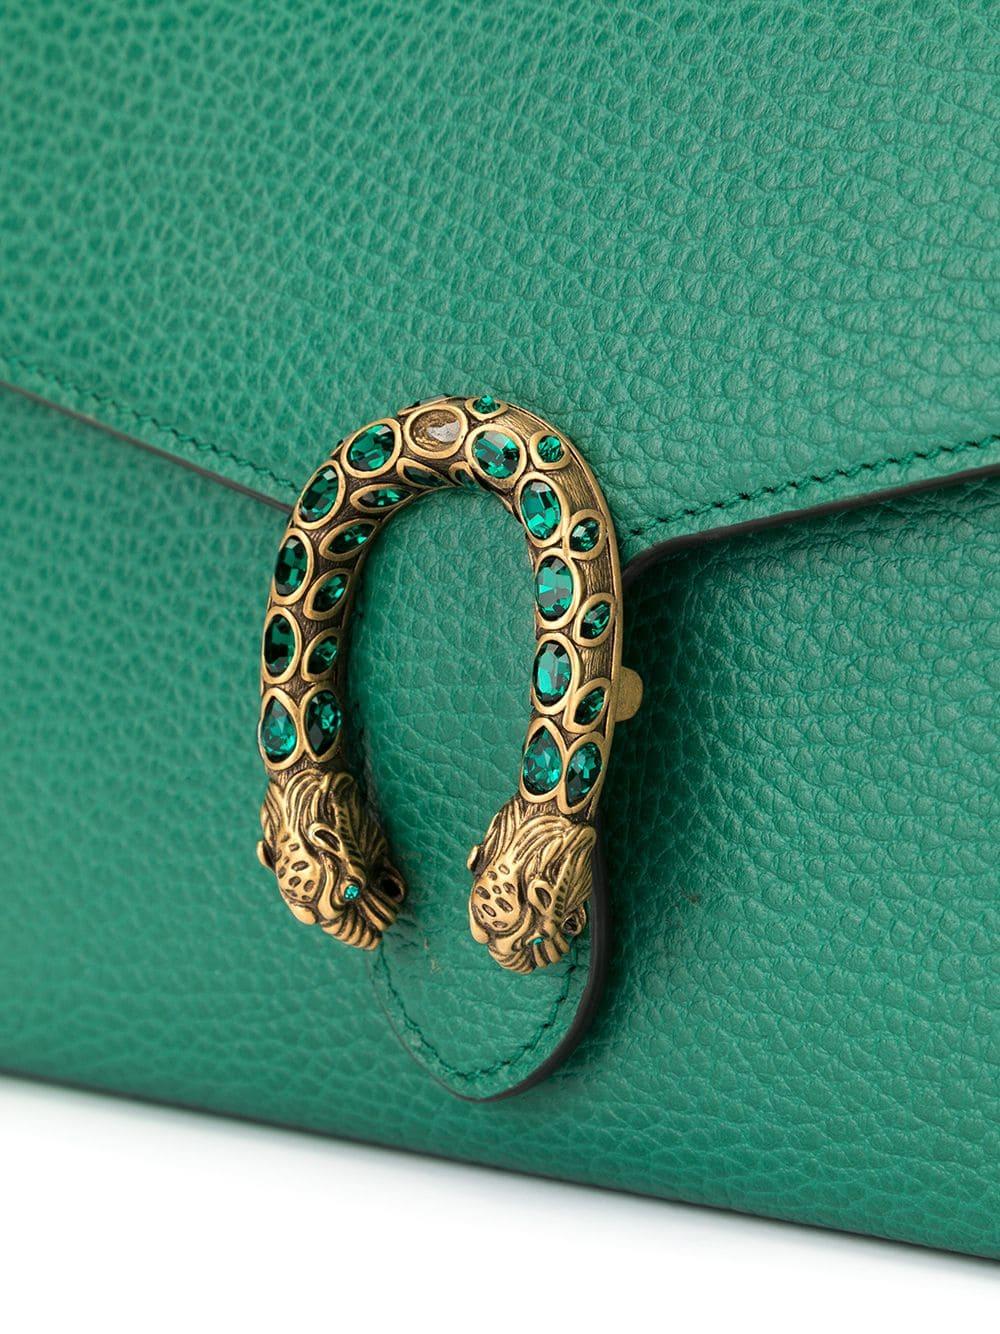 Gucci Dionysus Mini Chain Bag in Green - Lyst